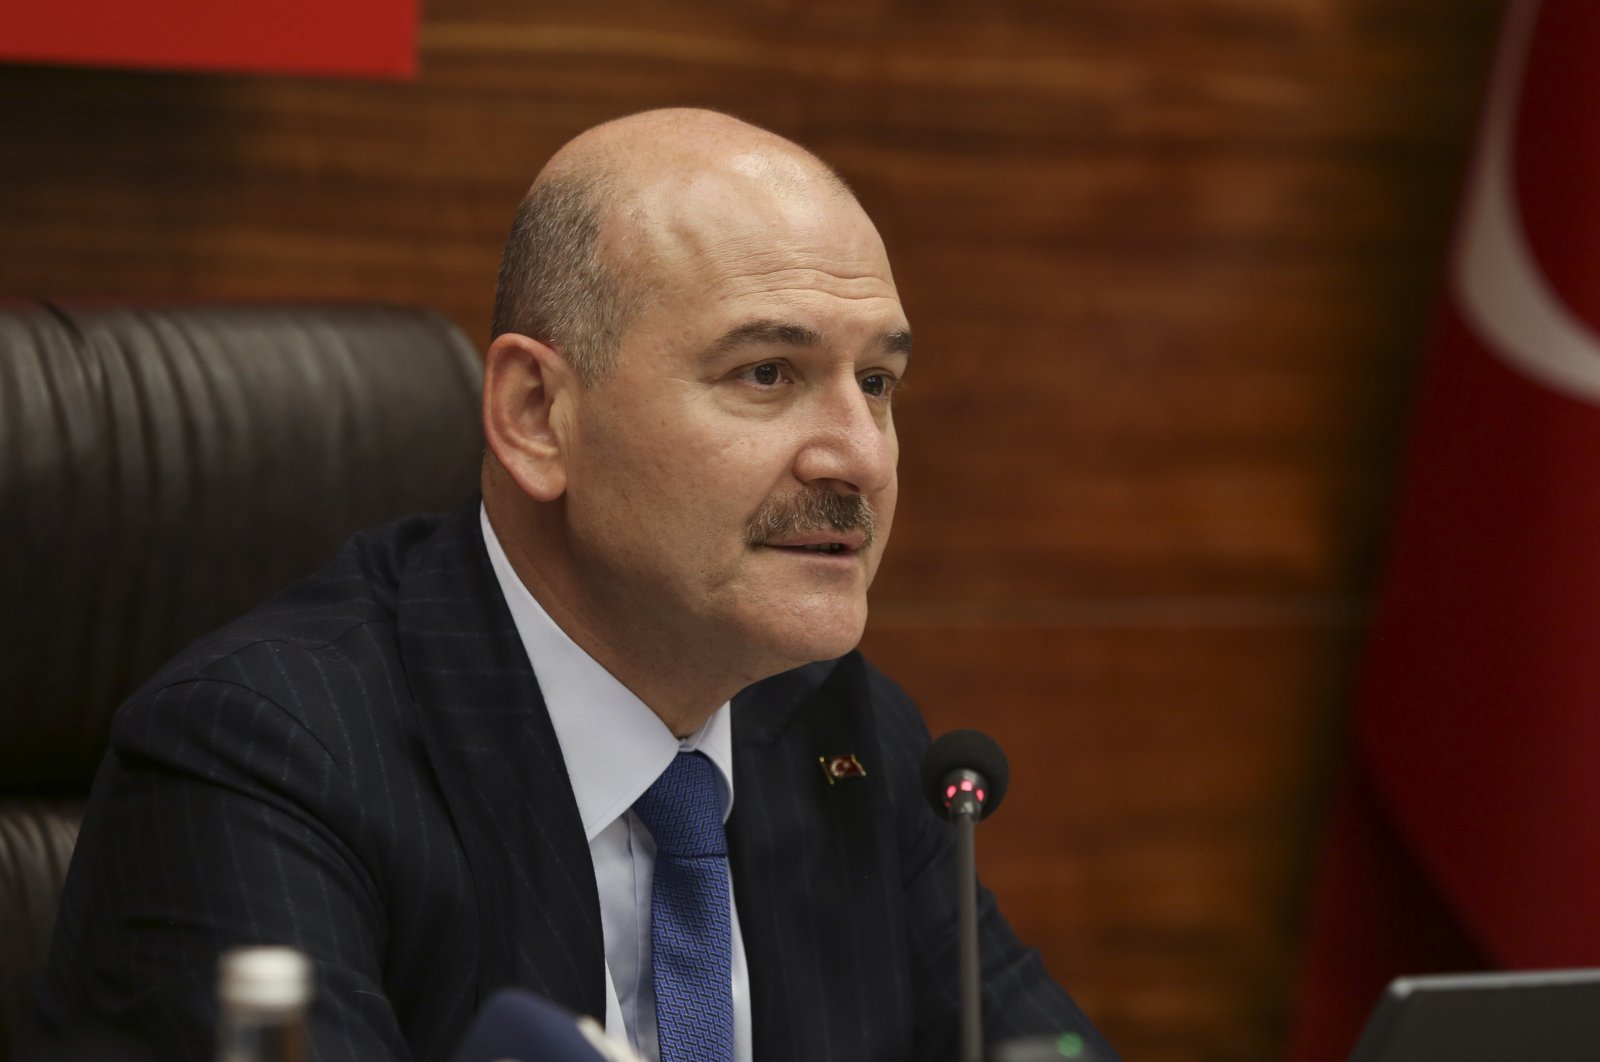 Interior Minister Süleyman Soylu speaks at an event in Ankara, Dec.15, 2020. (IHA)